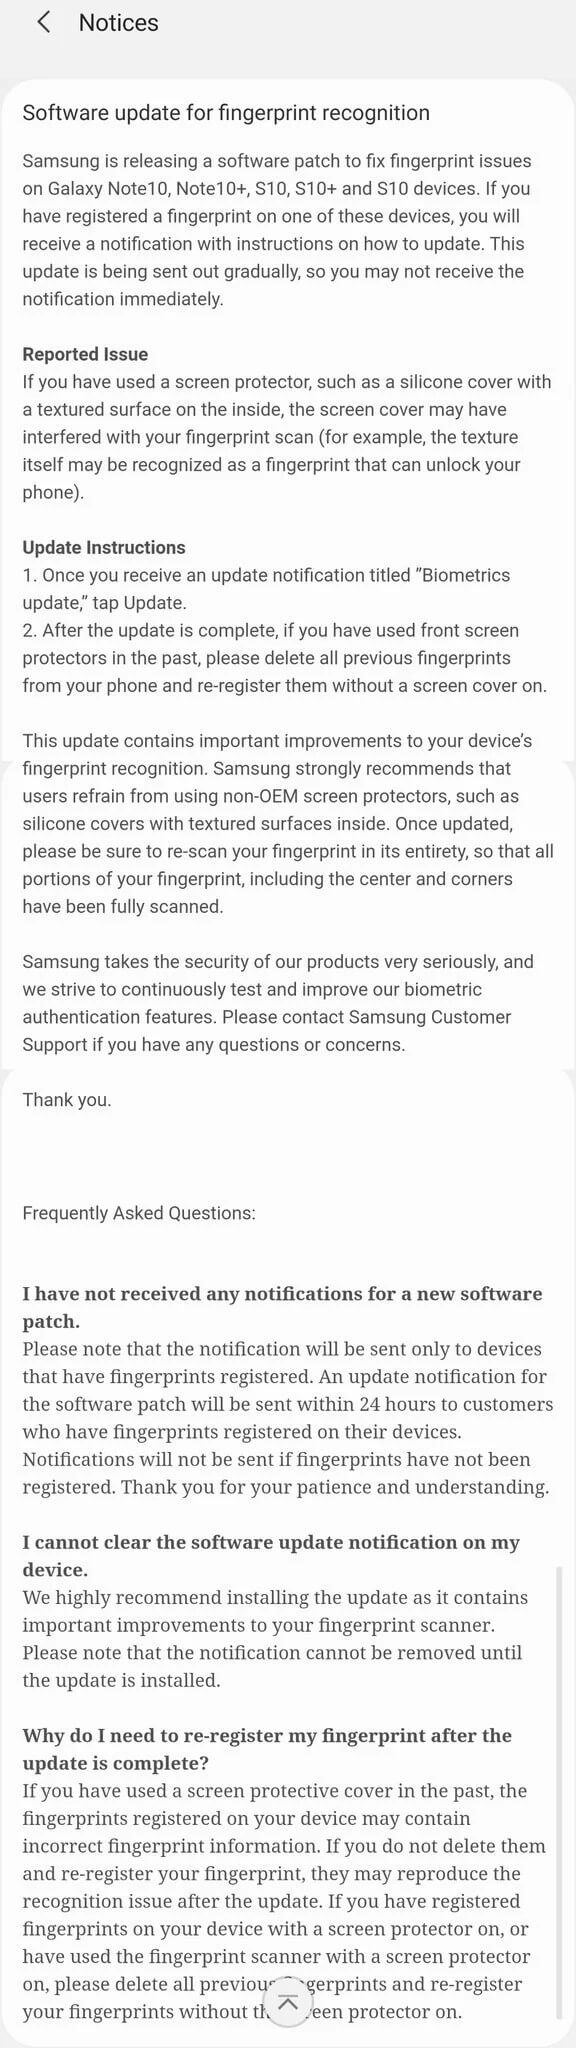 Samsung fix